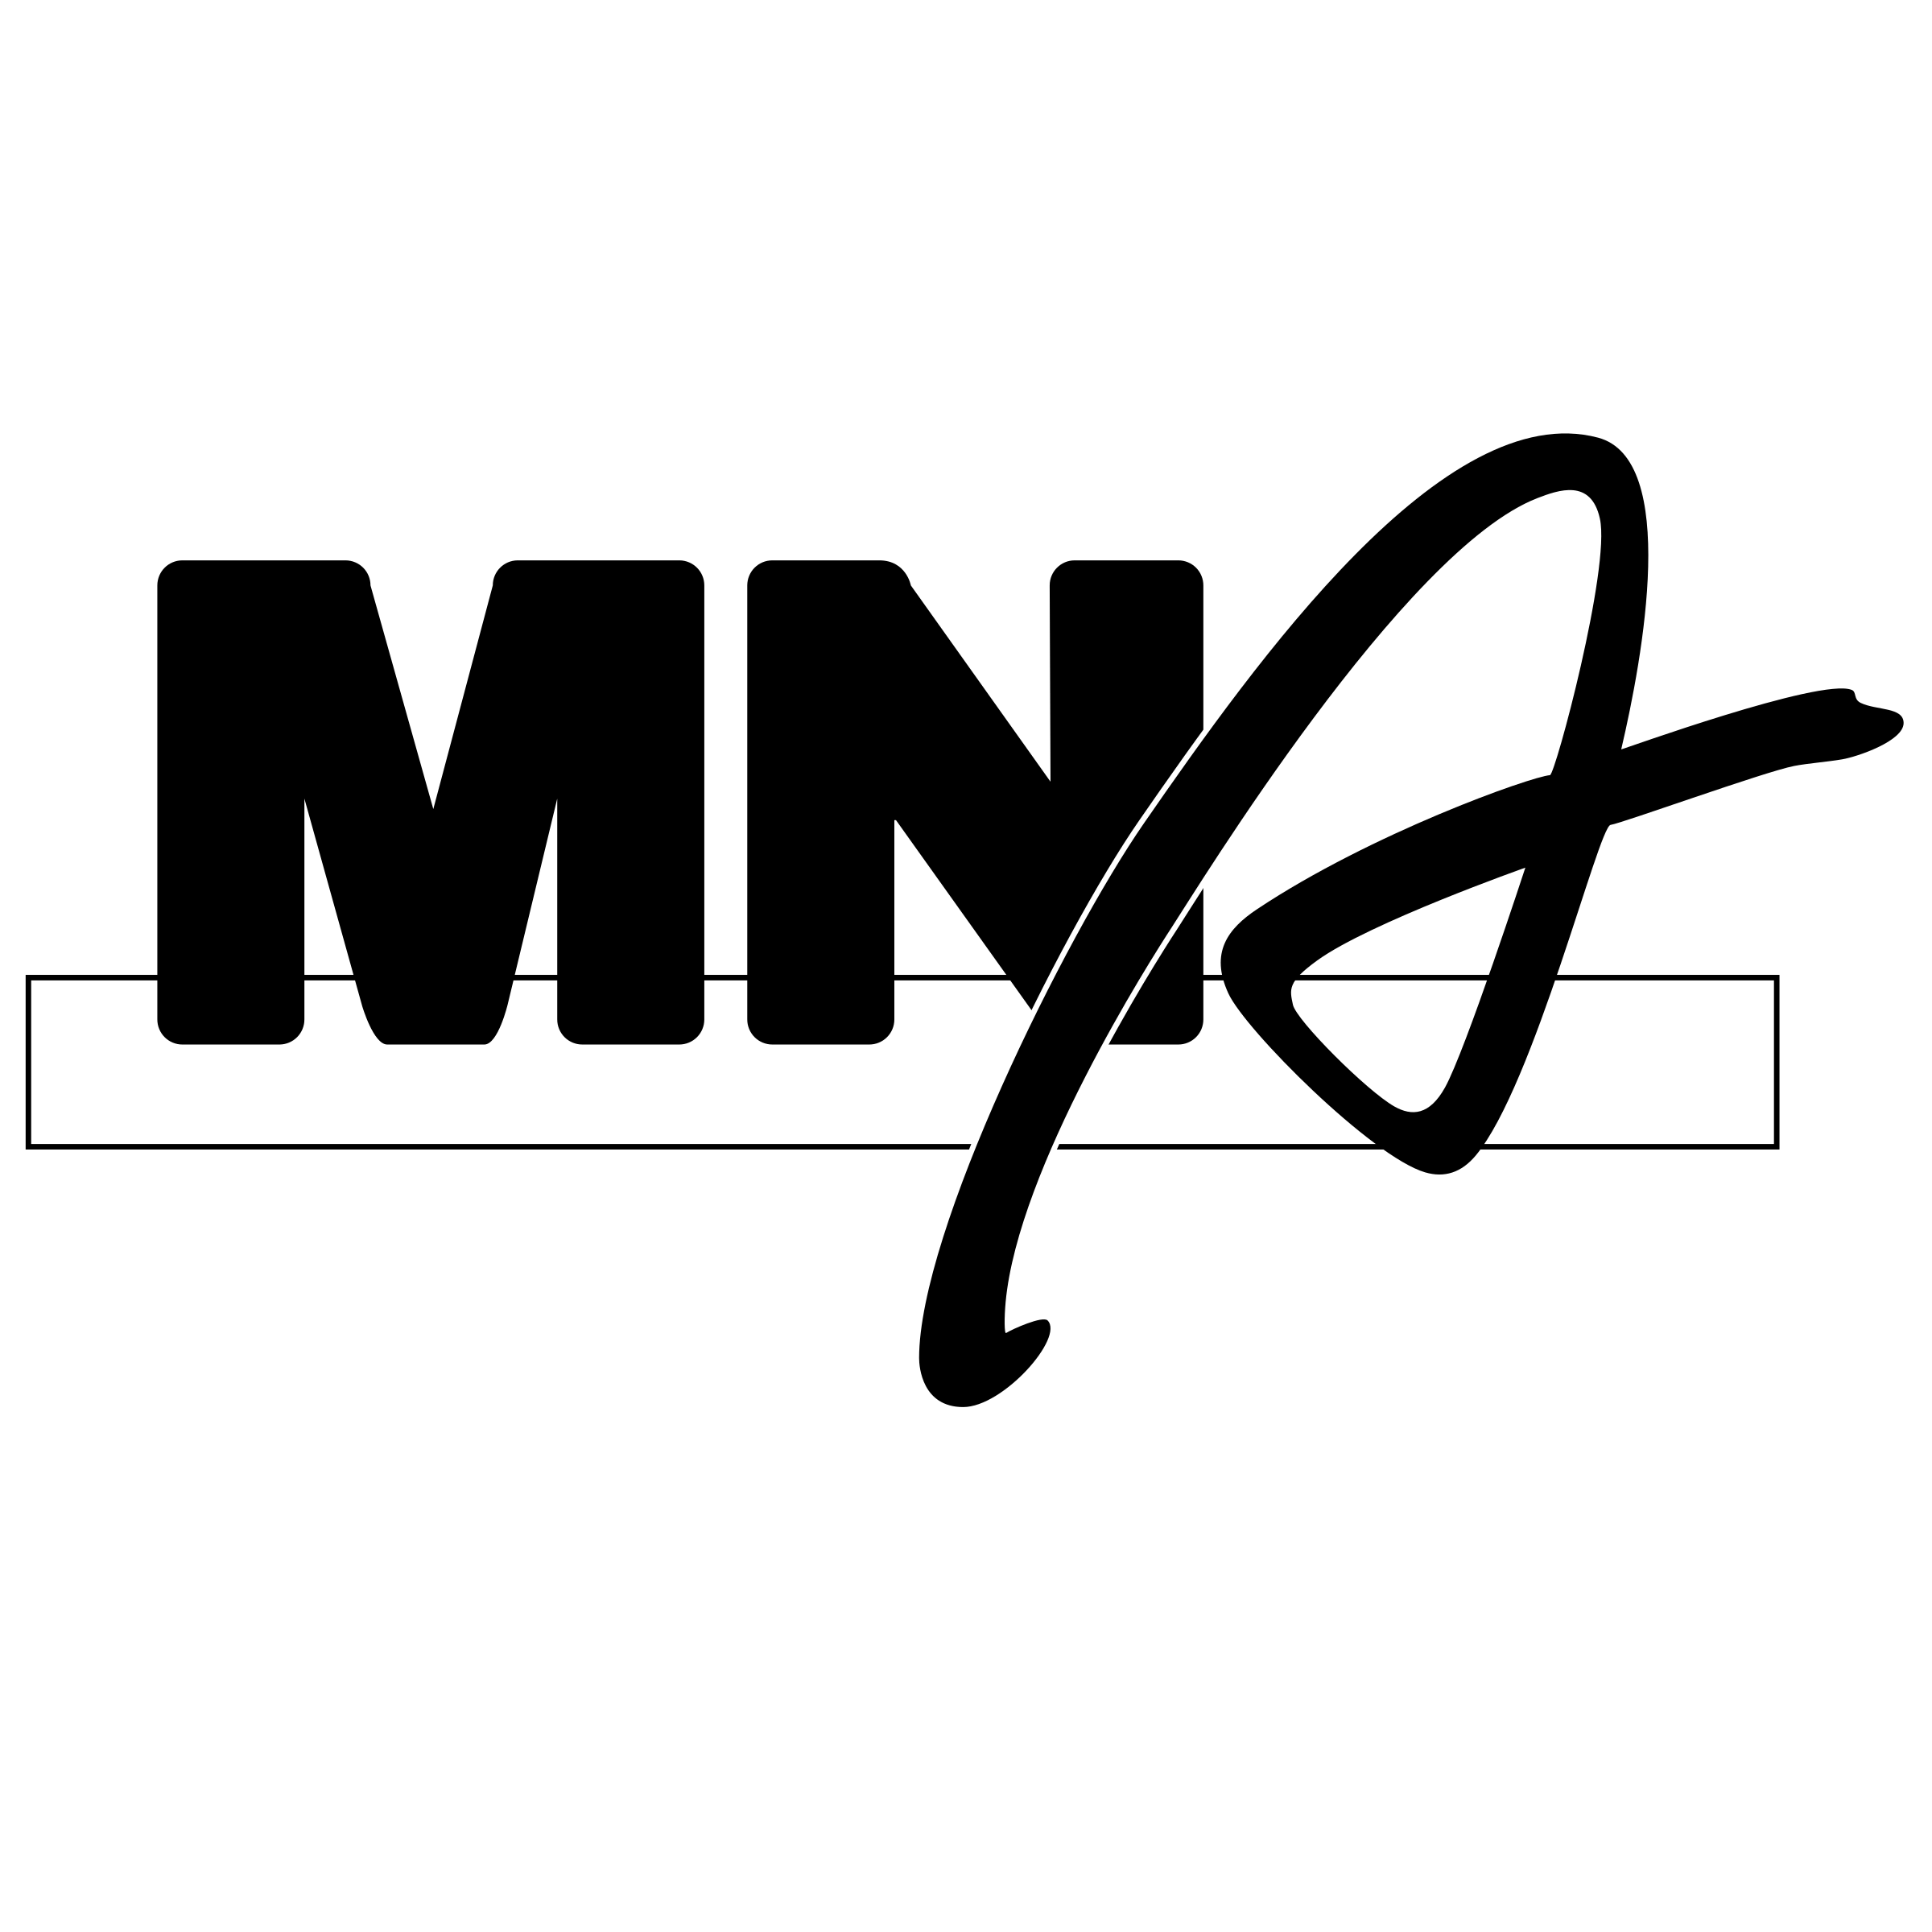 MNA Logo - MNA Logo PNG Transparent & SVG Vector - Freebie Supply